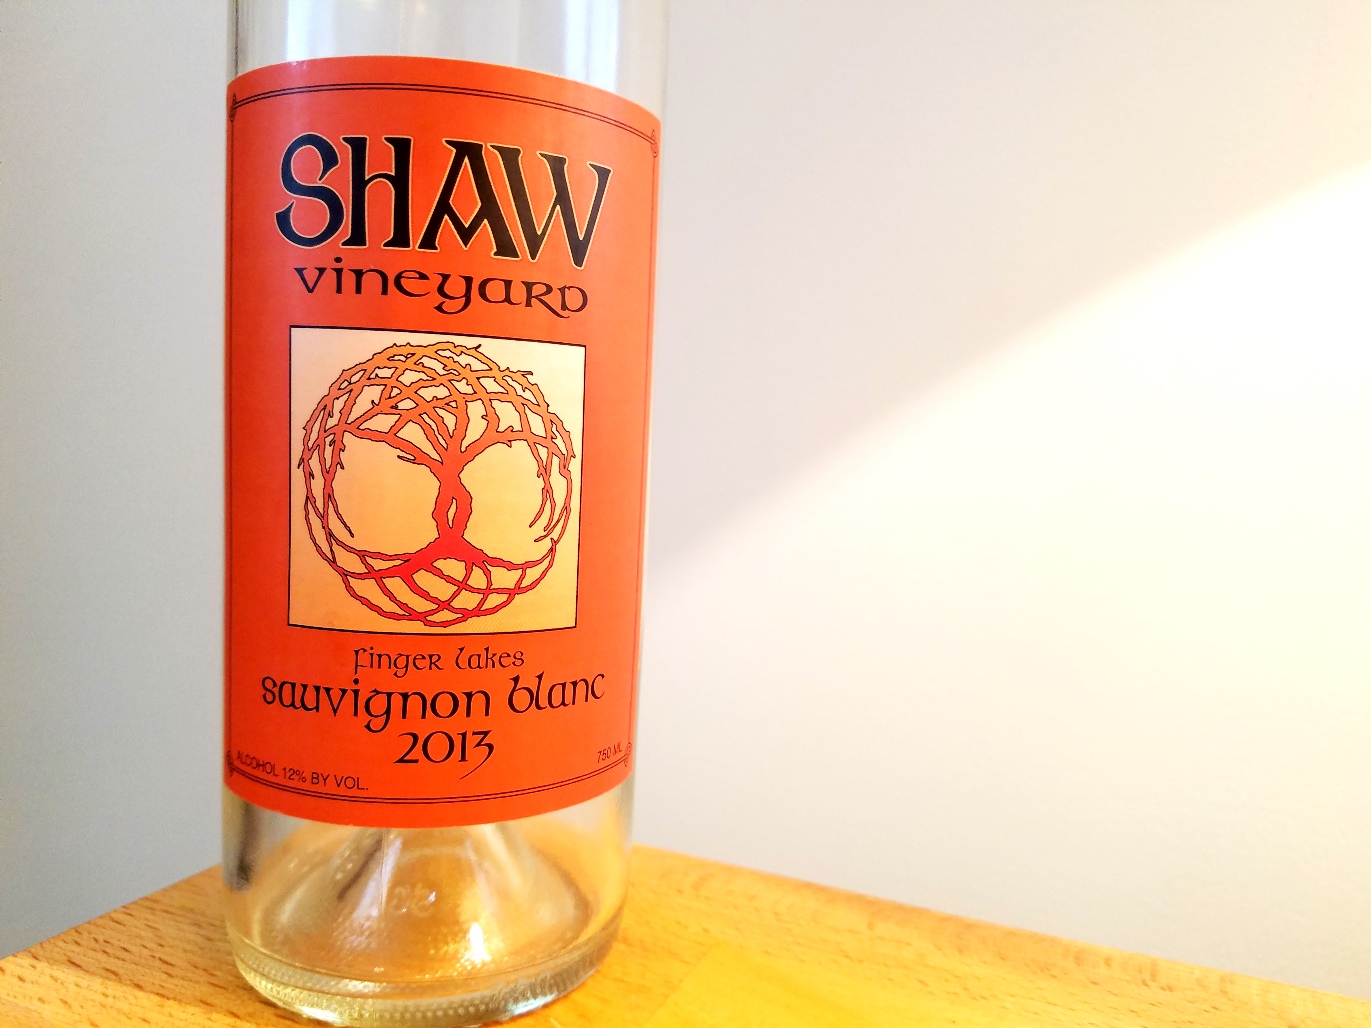 Shaw Vineyard, Sauvignon Blanc 2013, Finger Lakes, New York, Wine Casual